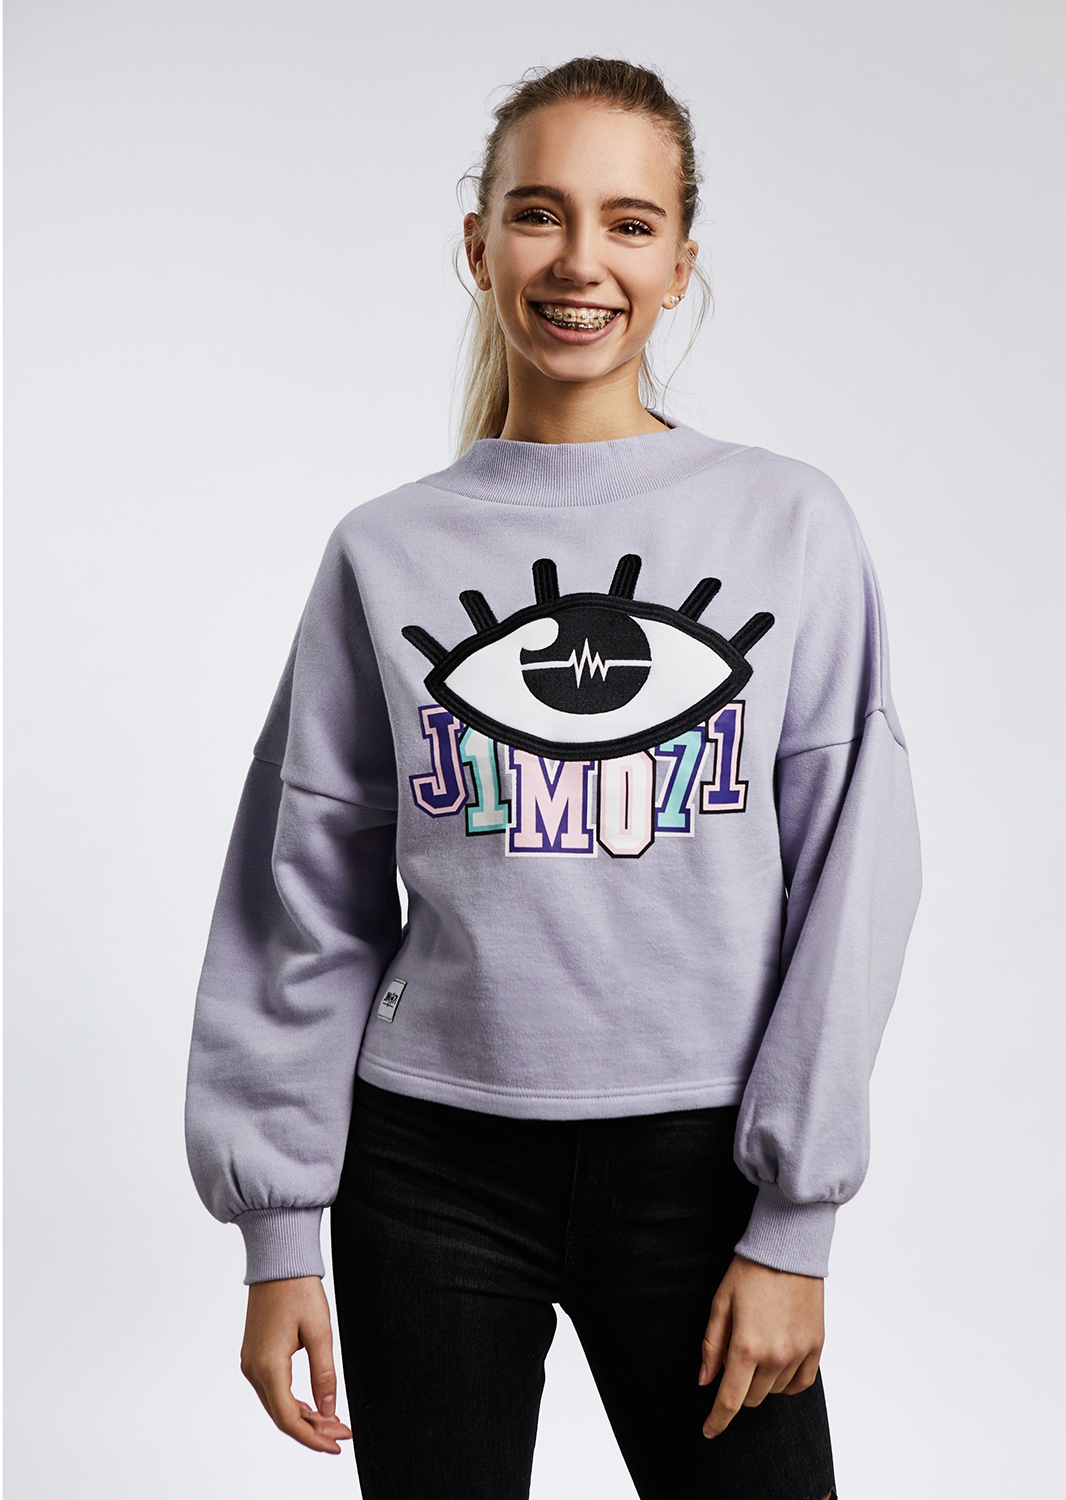 J1MO71 - Eye Crewneck - Girls sweatshirt - lilac image